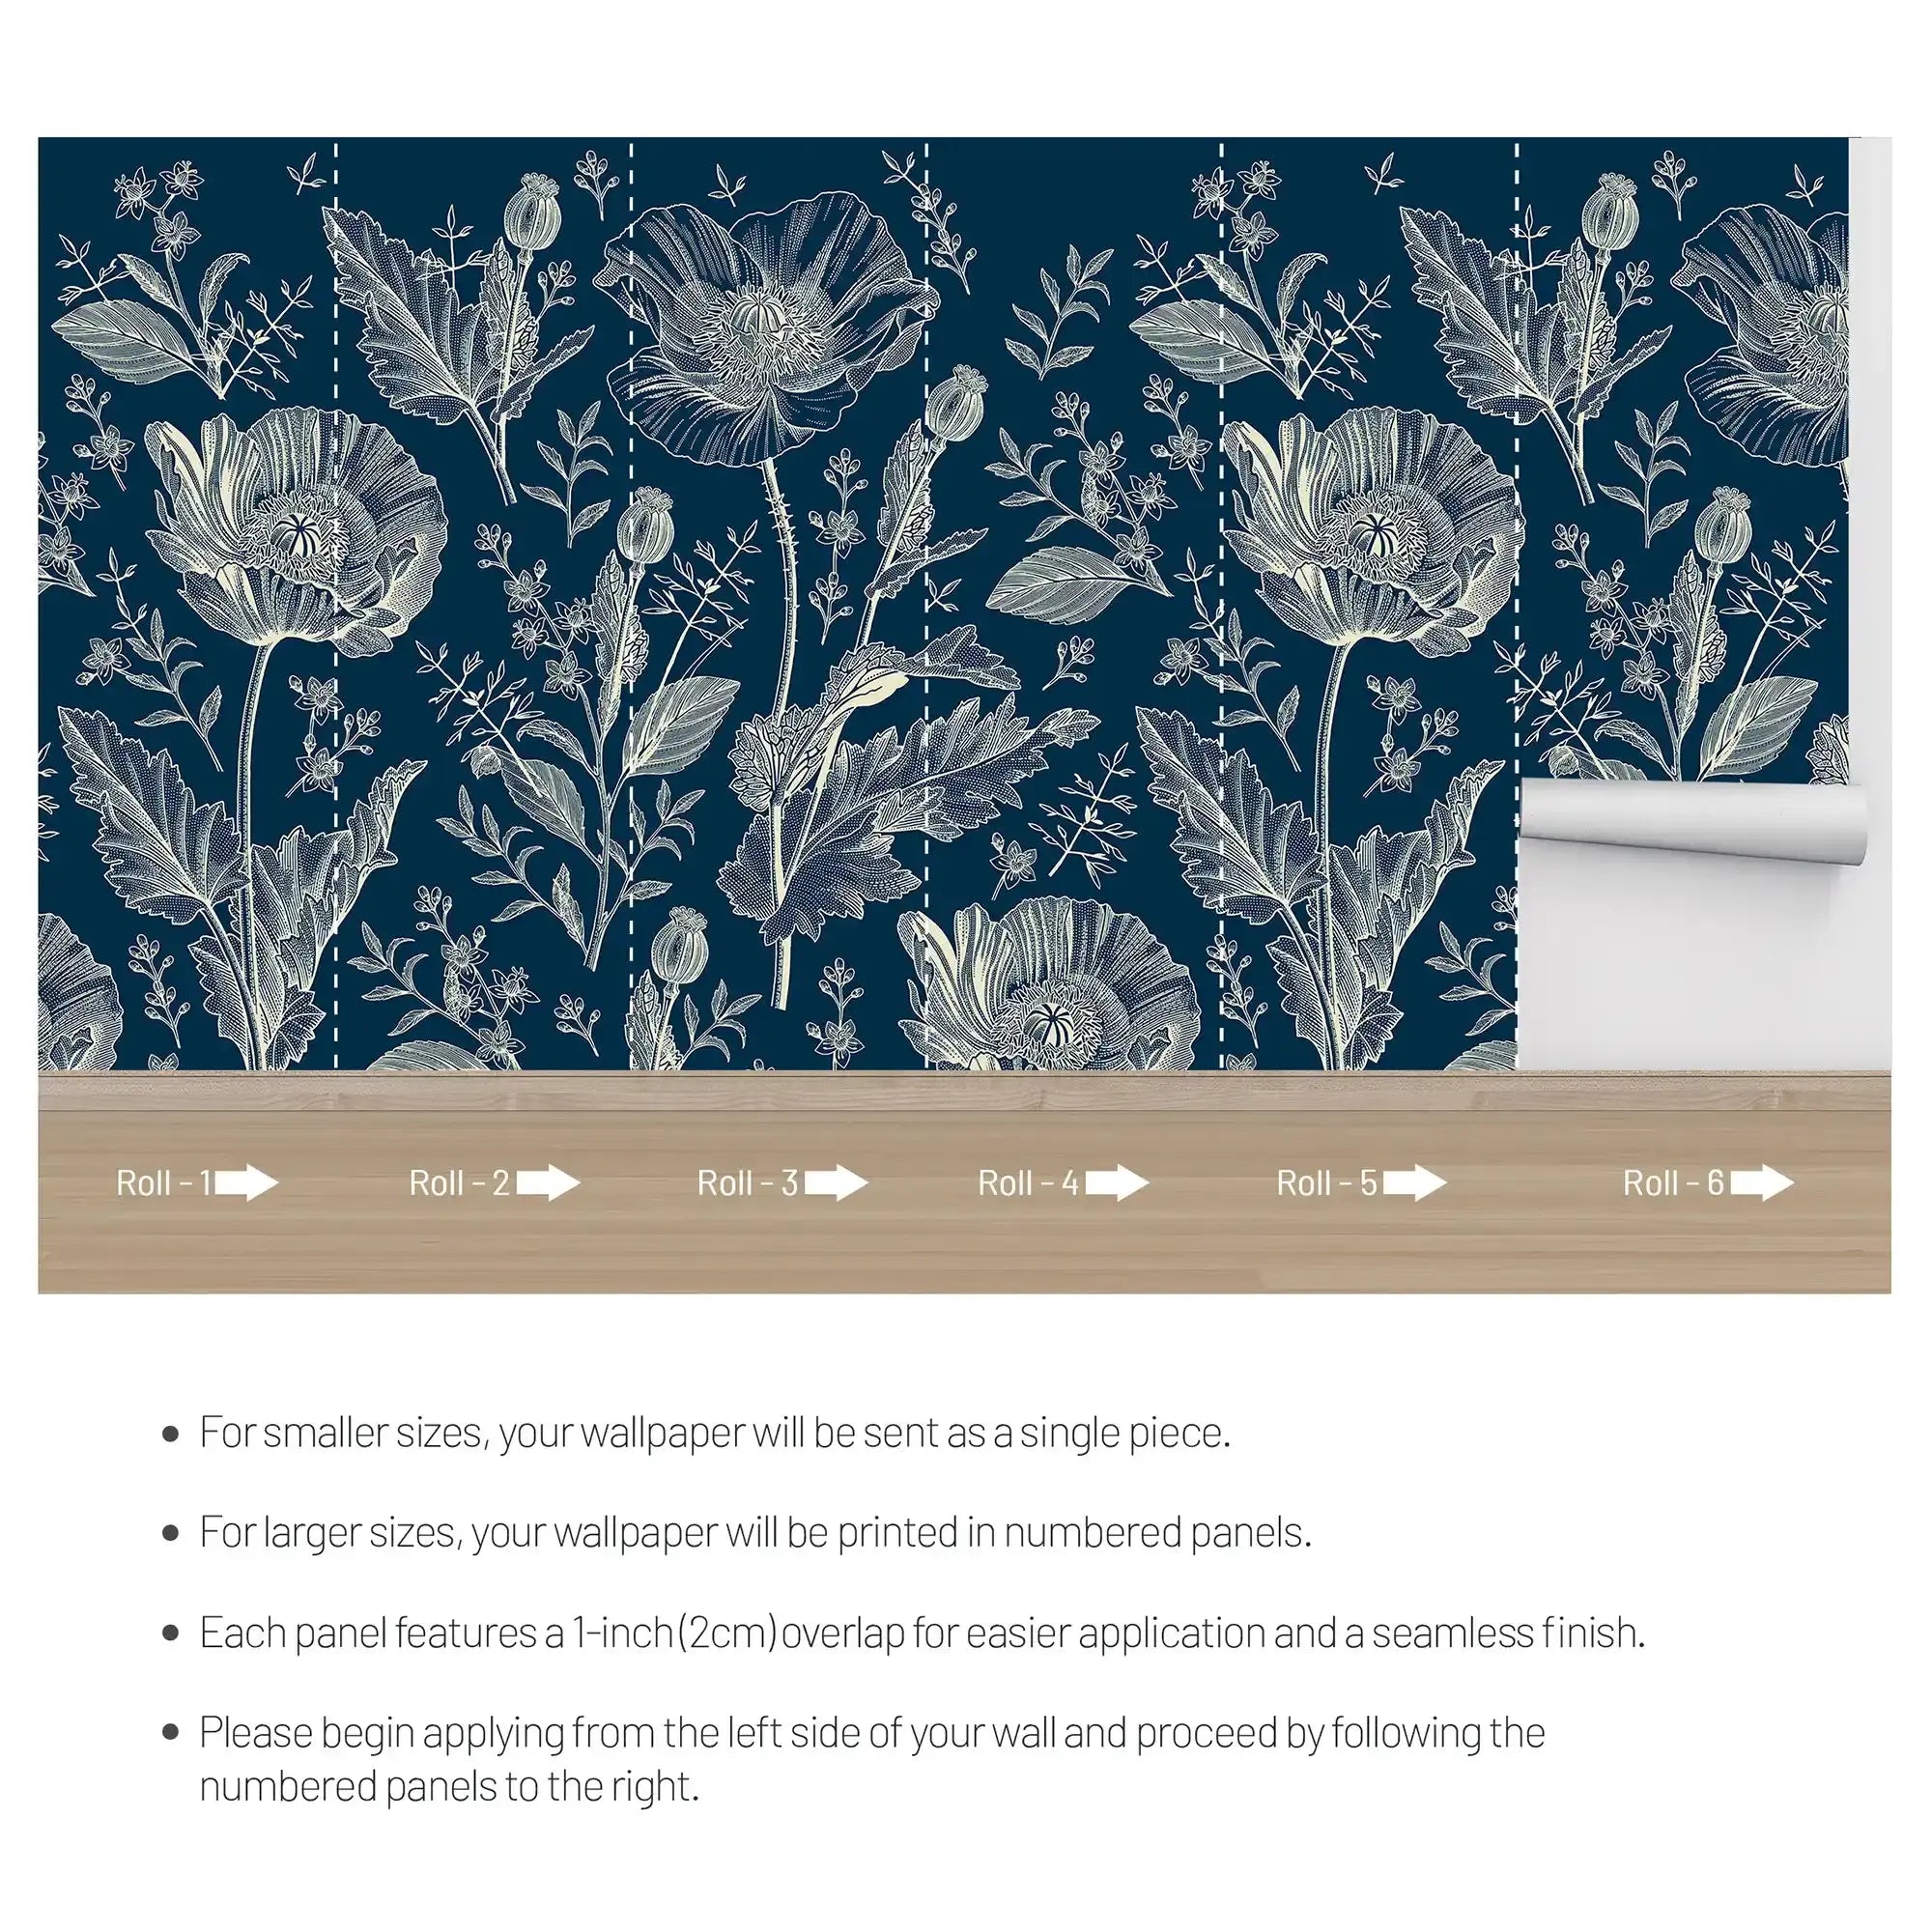 3093-B / Floral Wall Mural: Self Adhesive, Removable Wallpaper for Modern and Boho Decor - Artevella